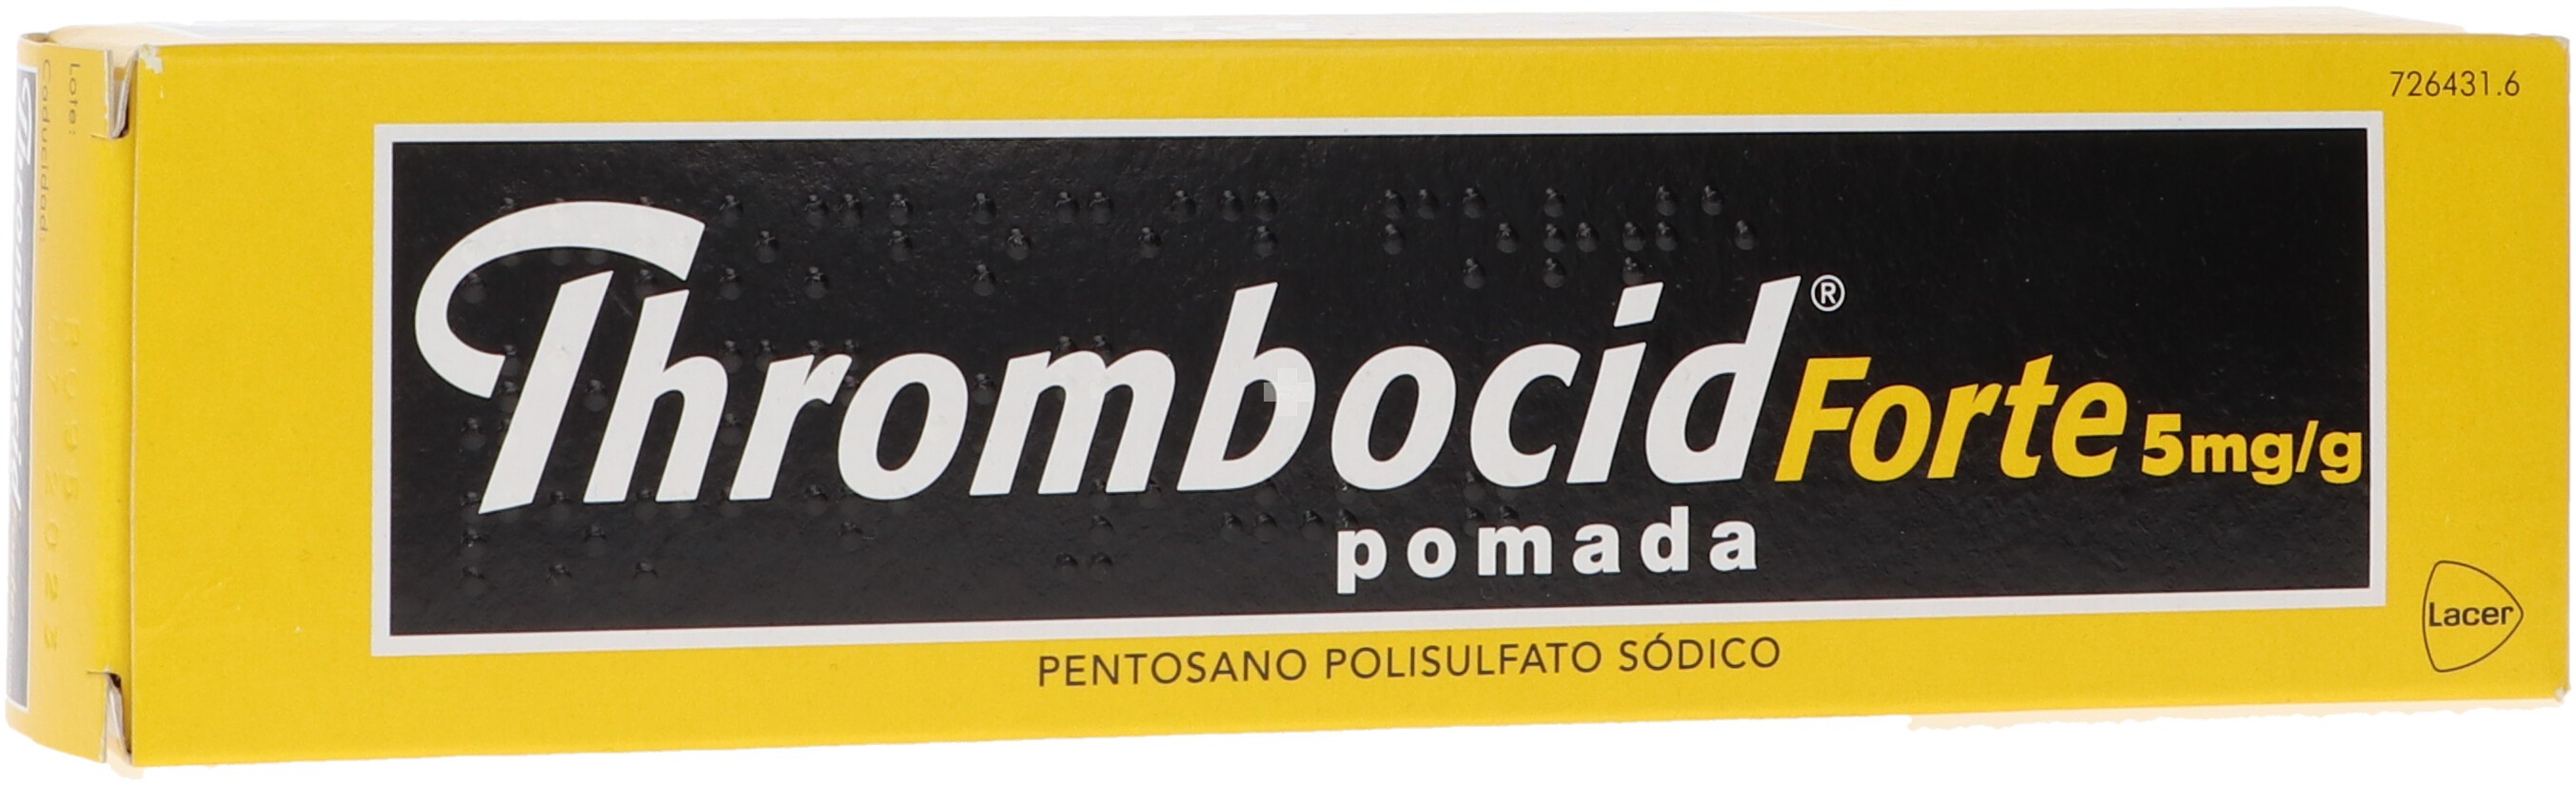 thrombocid Forte 5 mg/g Pomada 100 Gramos